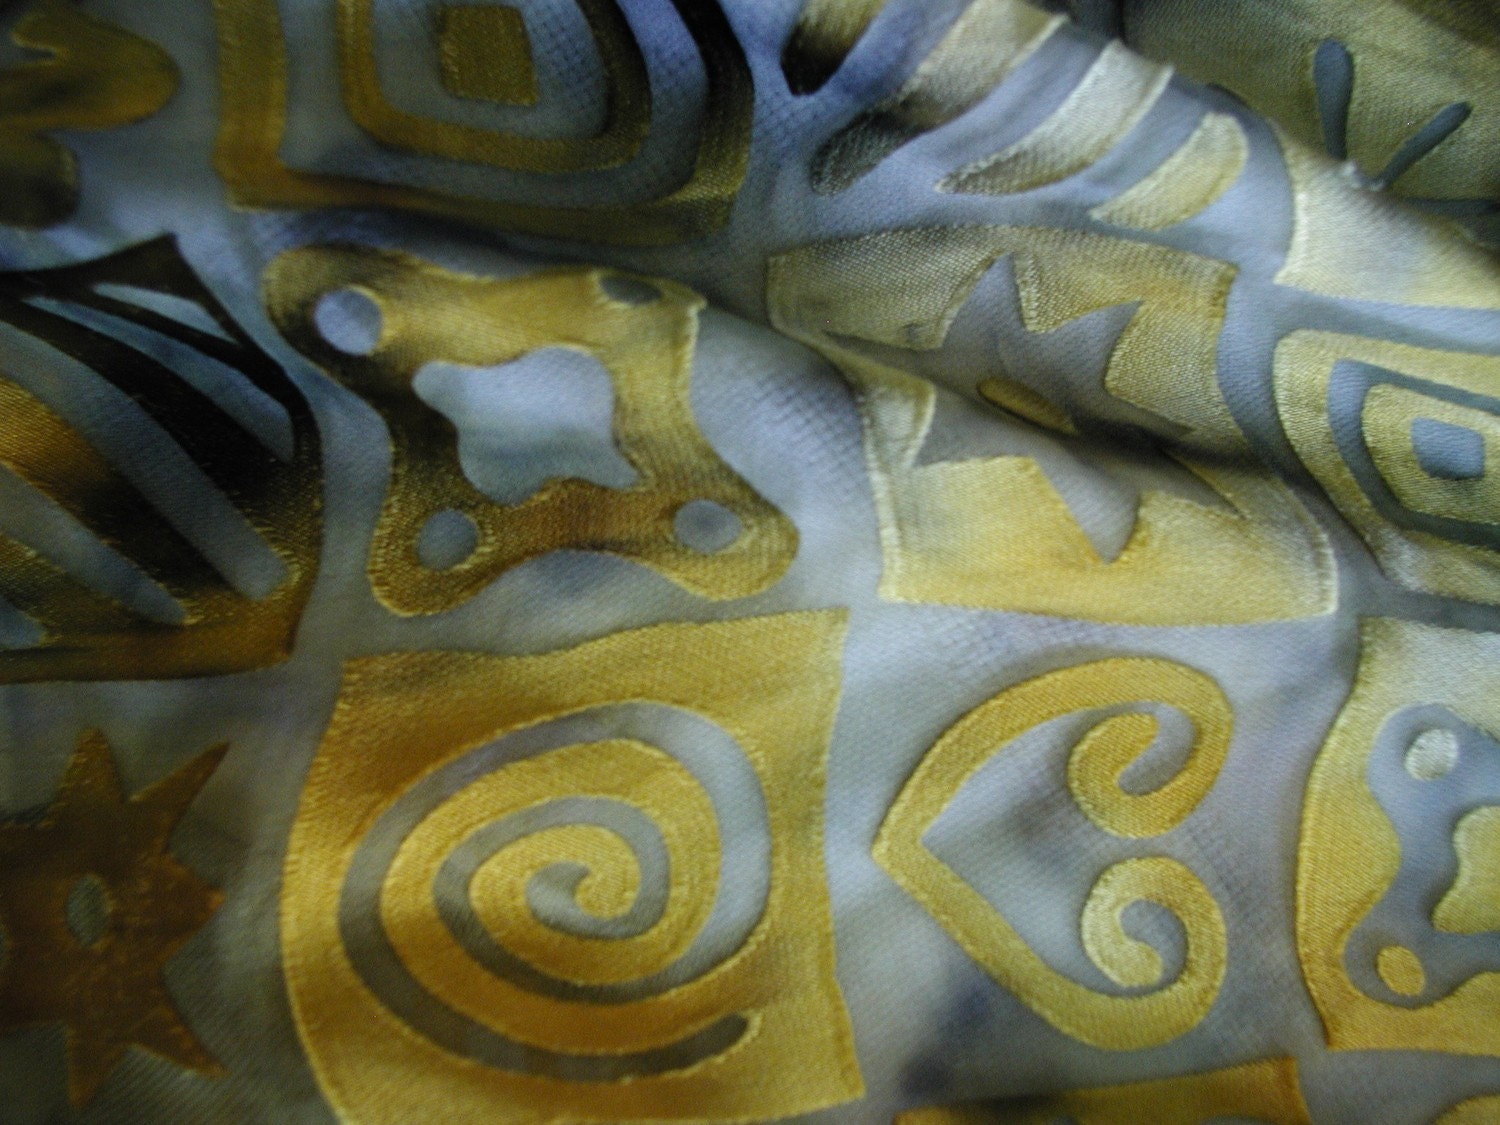 Hand dyed devore silk scarf in golden yellow and dark grays